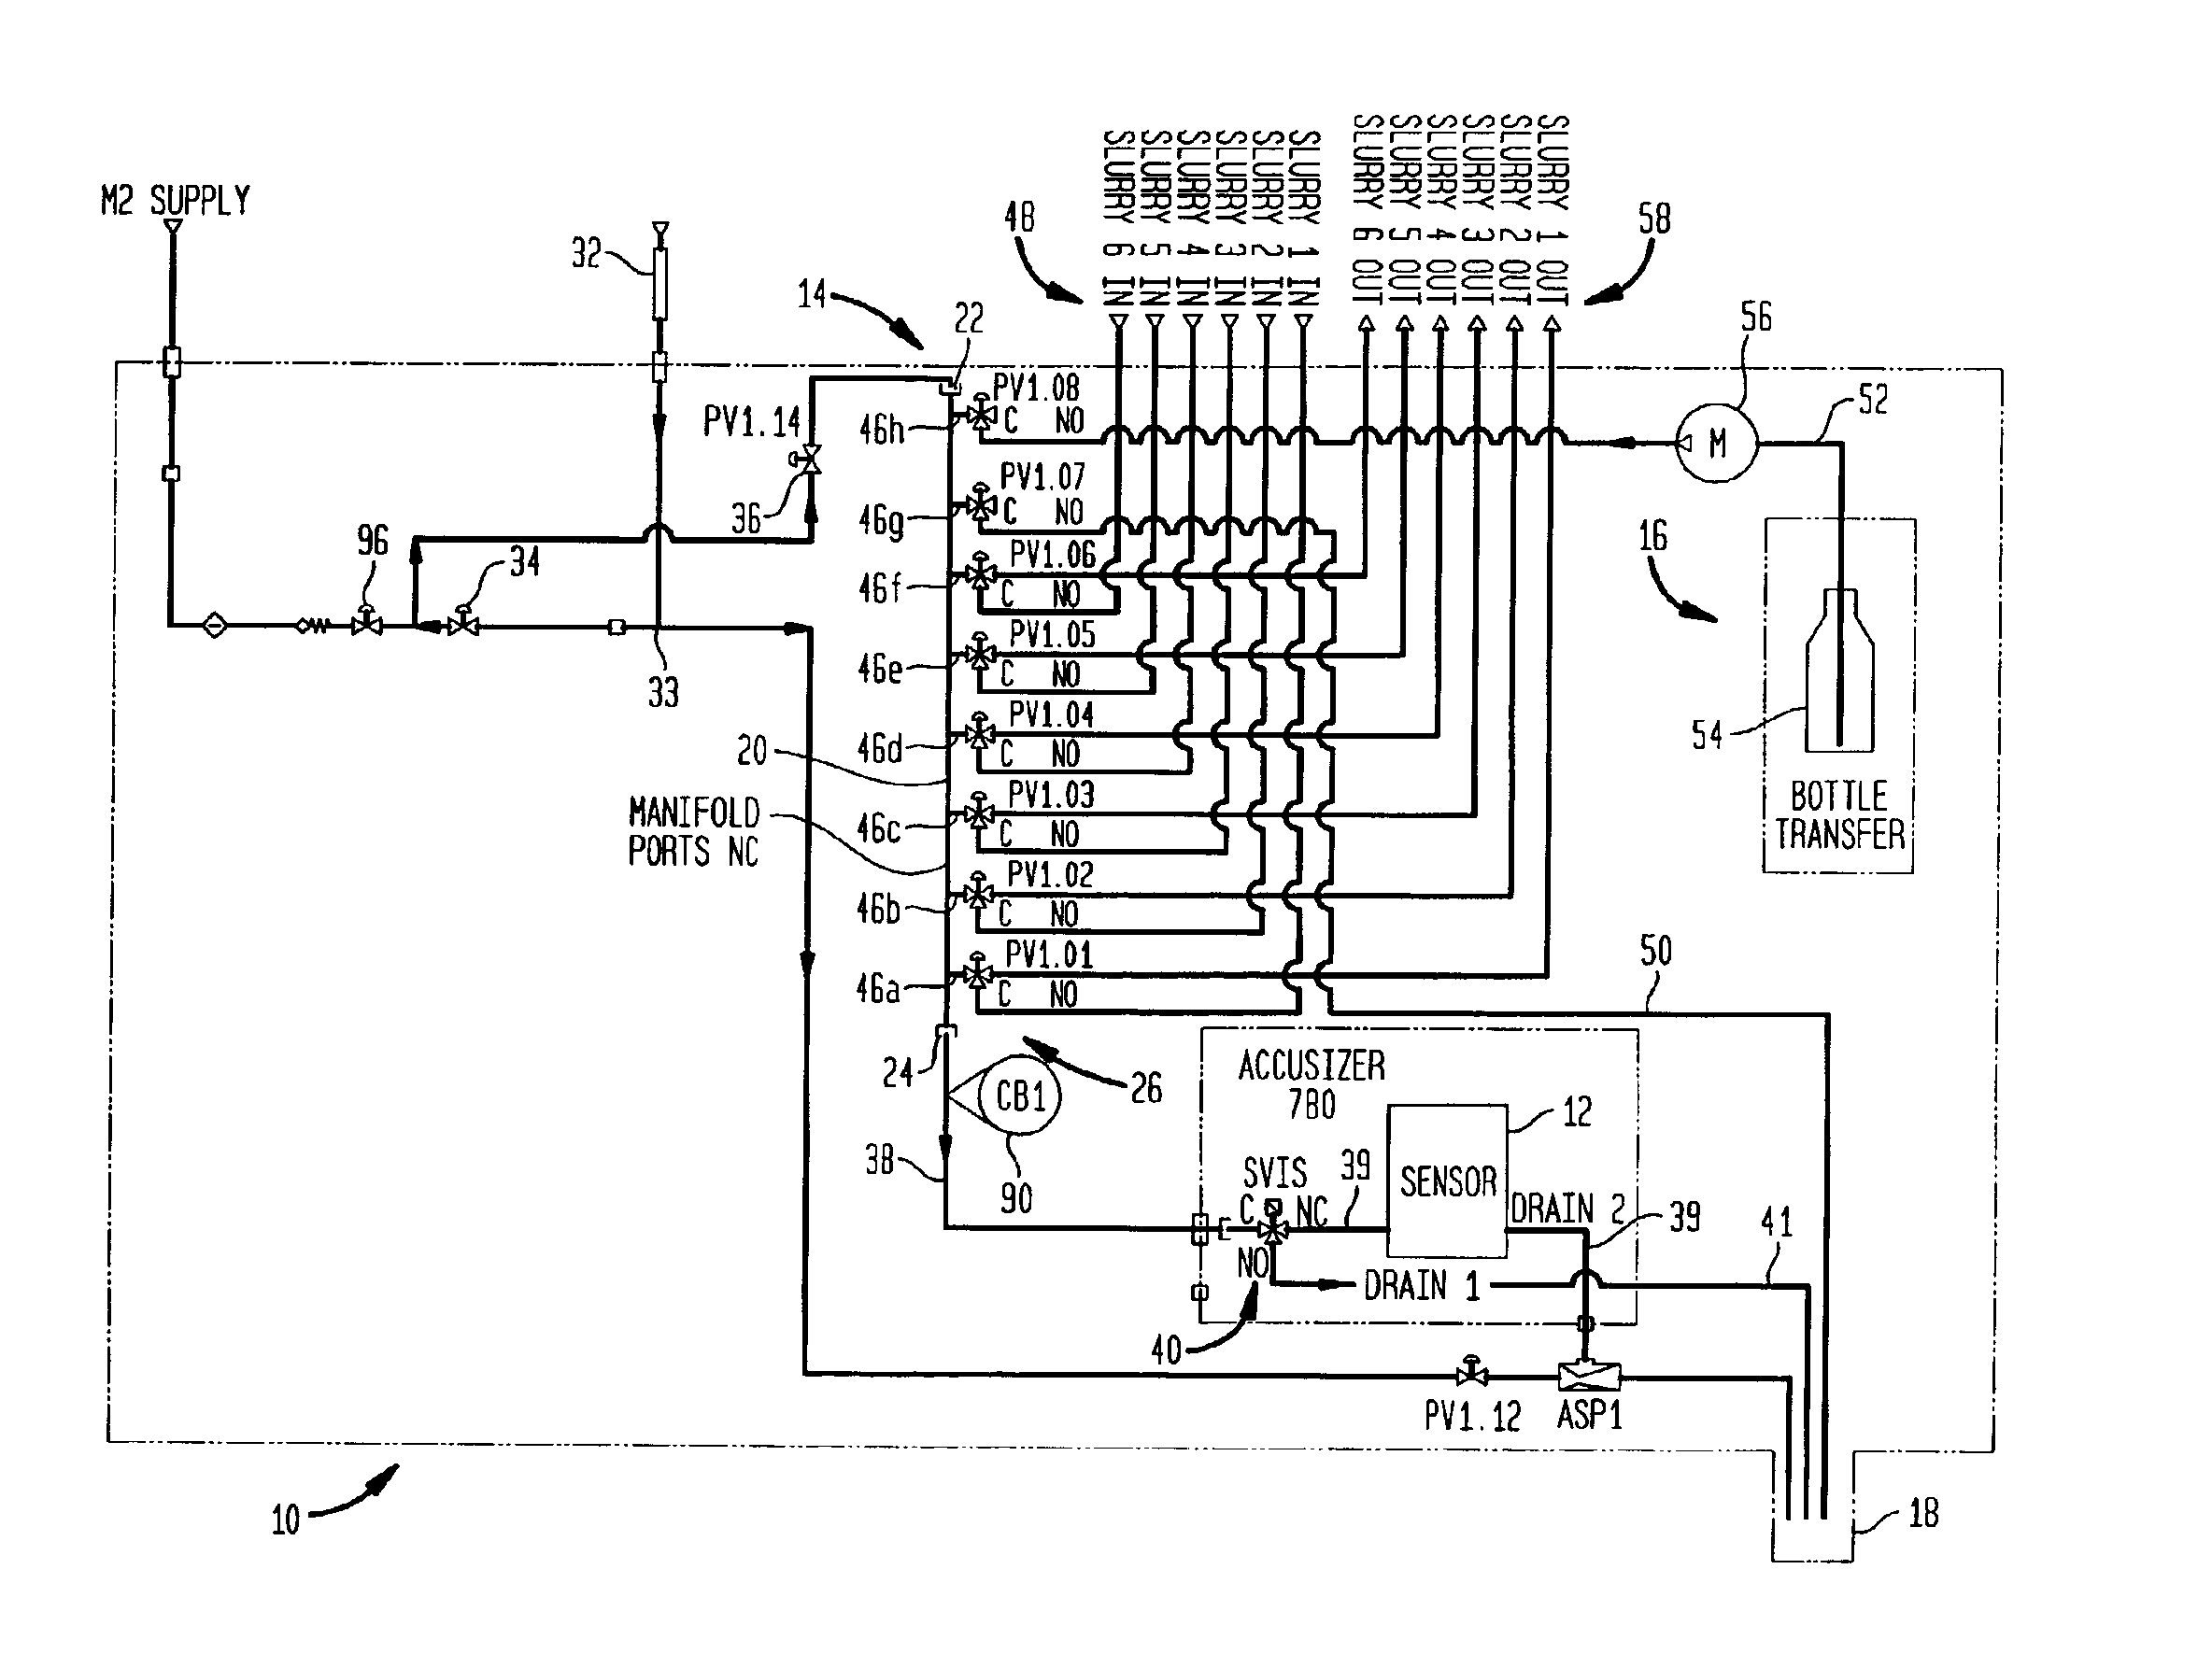 Flushing a multi-port valve manifold